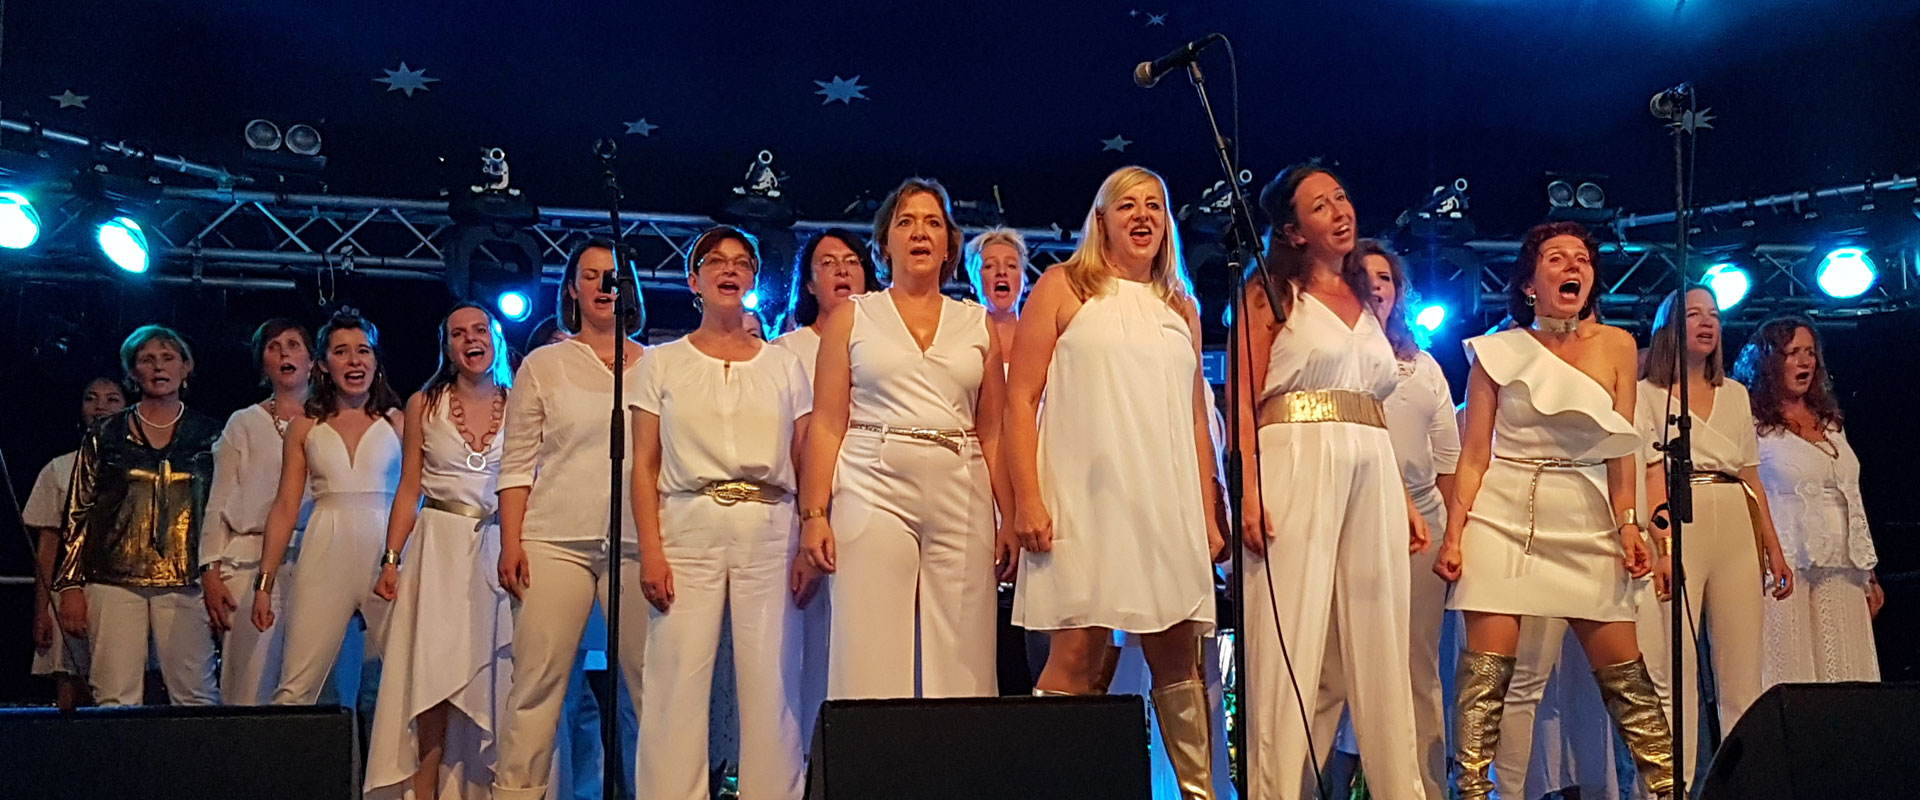 Abba Show – Uferlos Festival (2018)